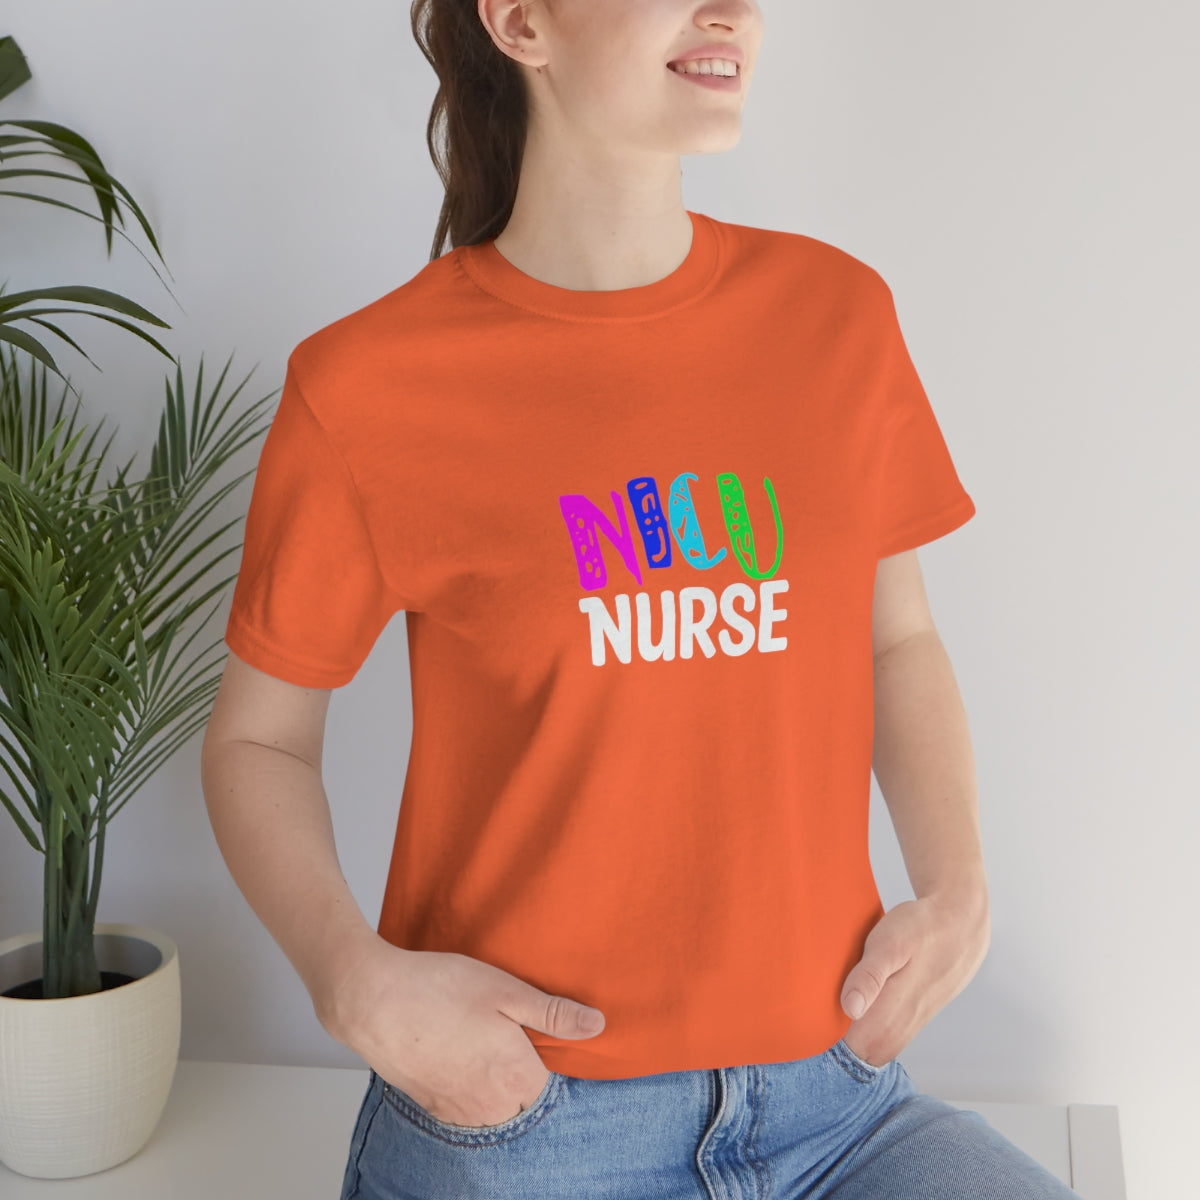 NICU Nurse Unisex Jersey Short Sleeve Tee